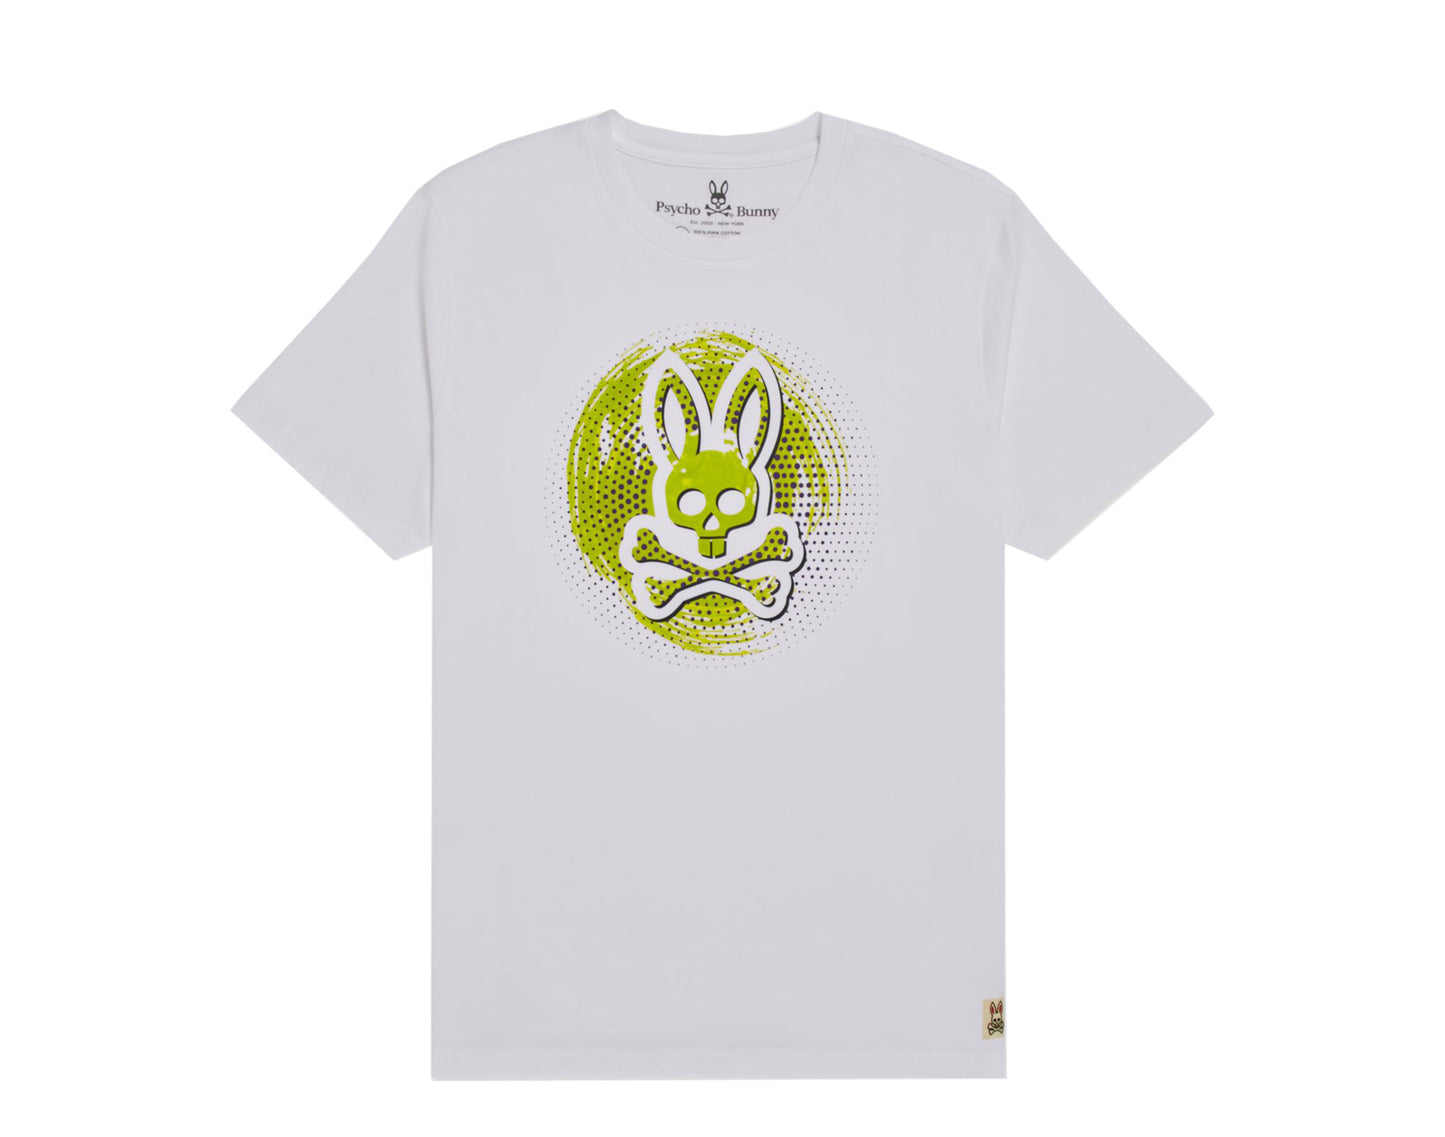 Psycho Bunny Downey Graphic Men's Tee Shirt